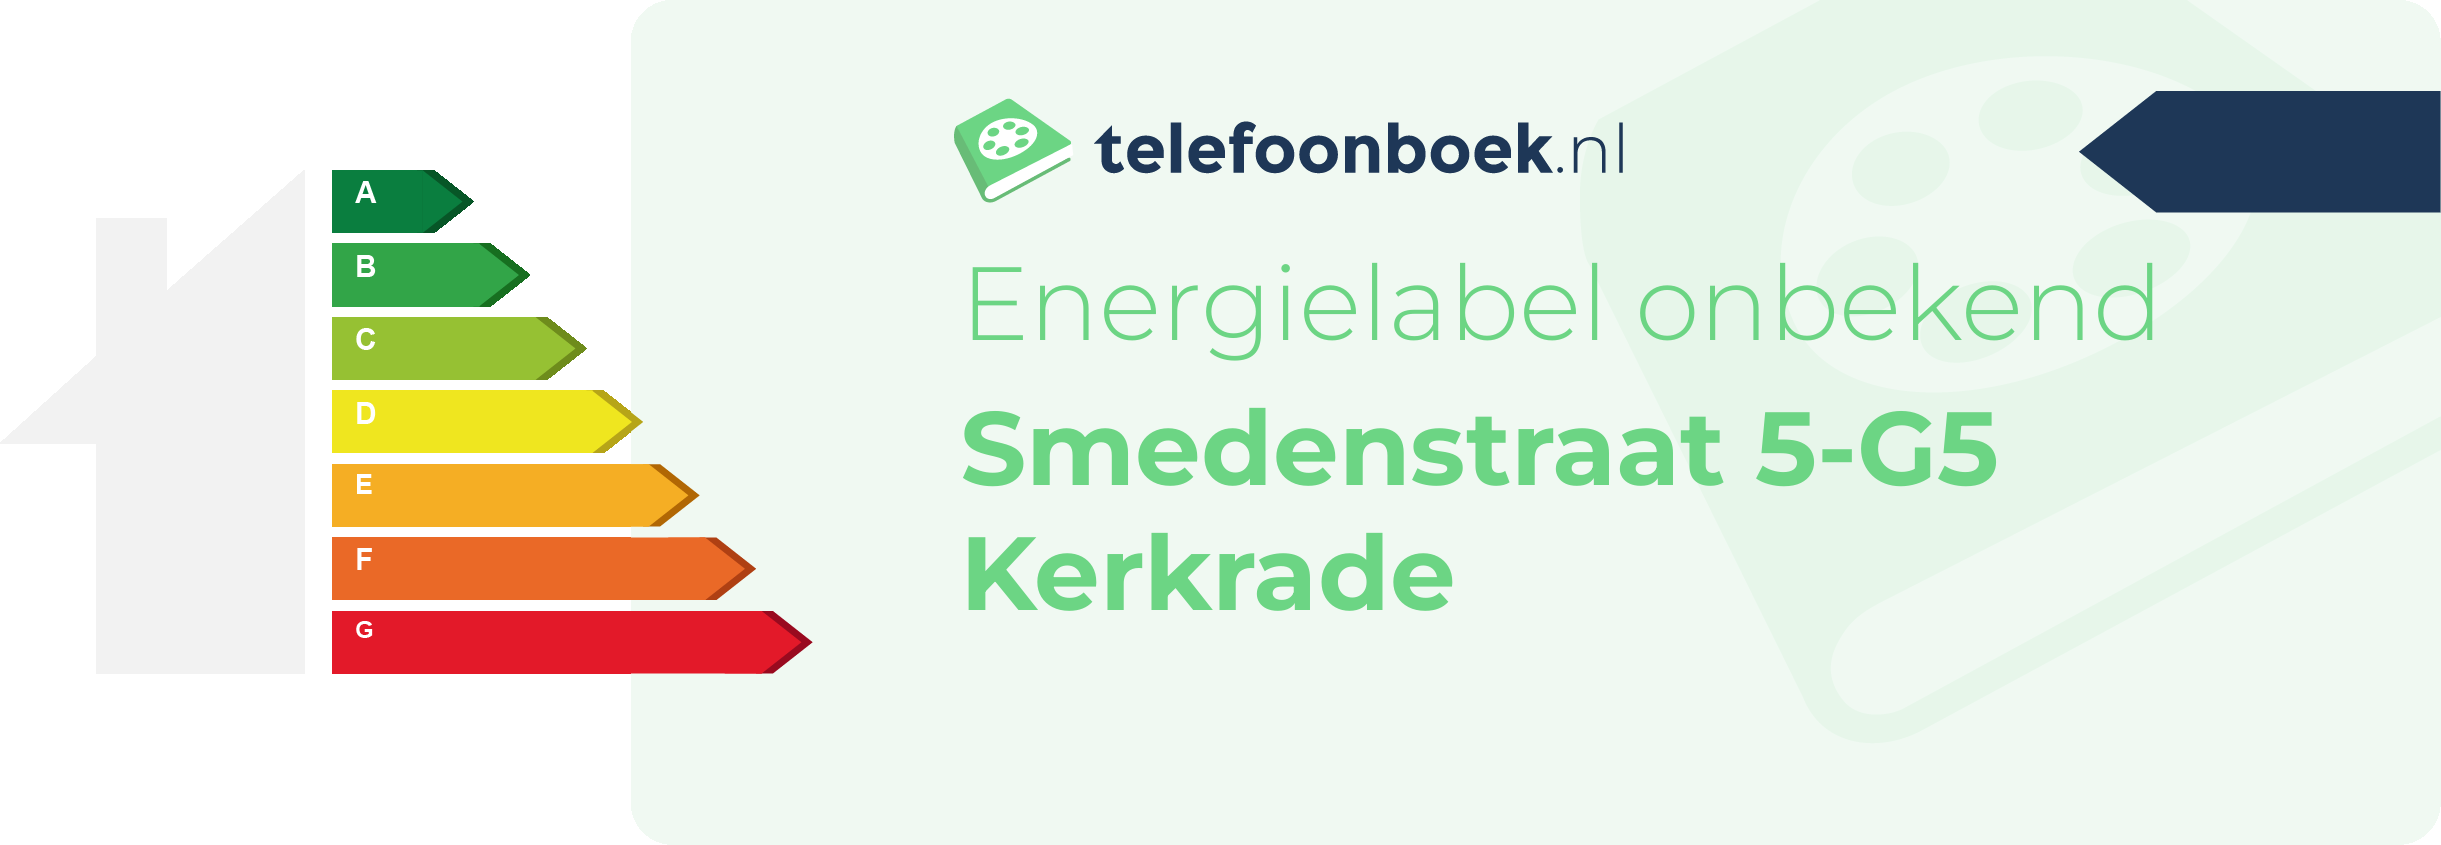 Energielabel Smedenstraat 5-G5 Kerkrade